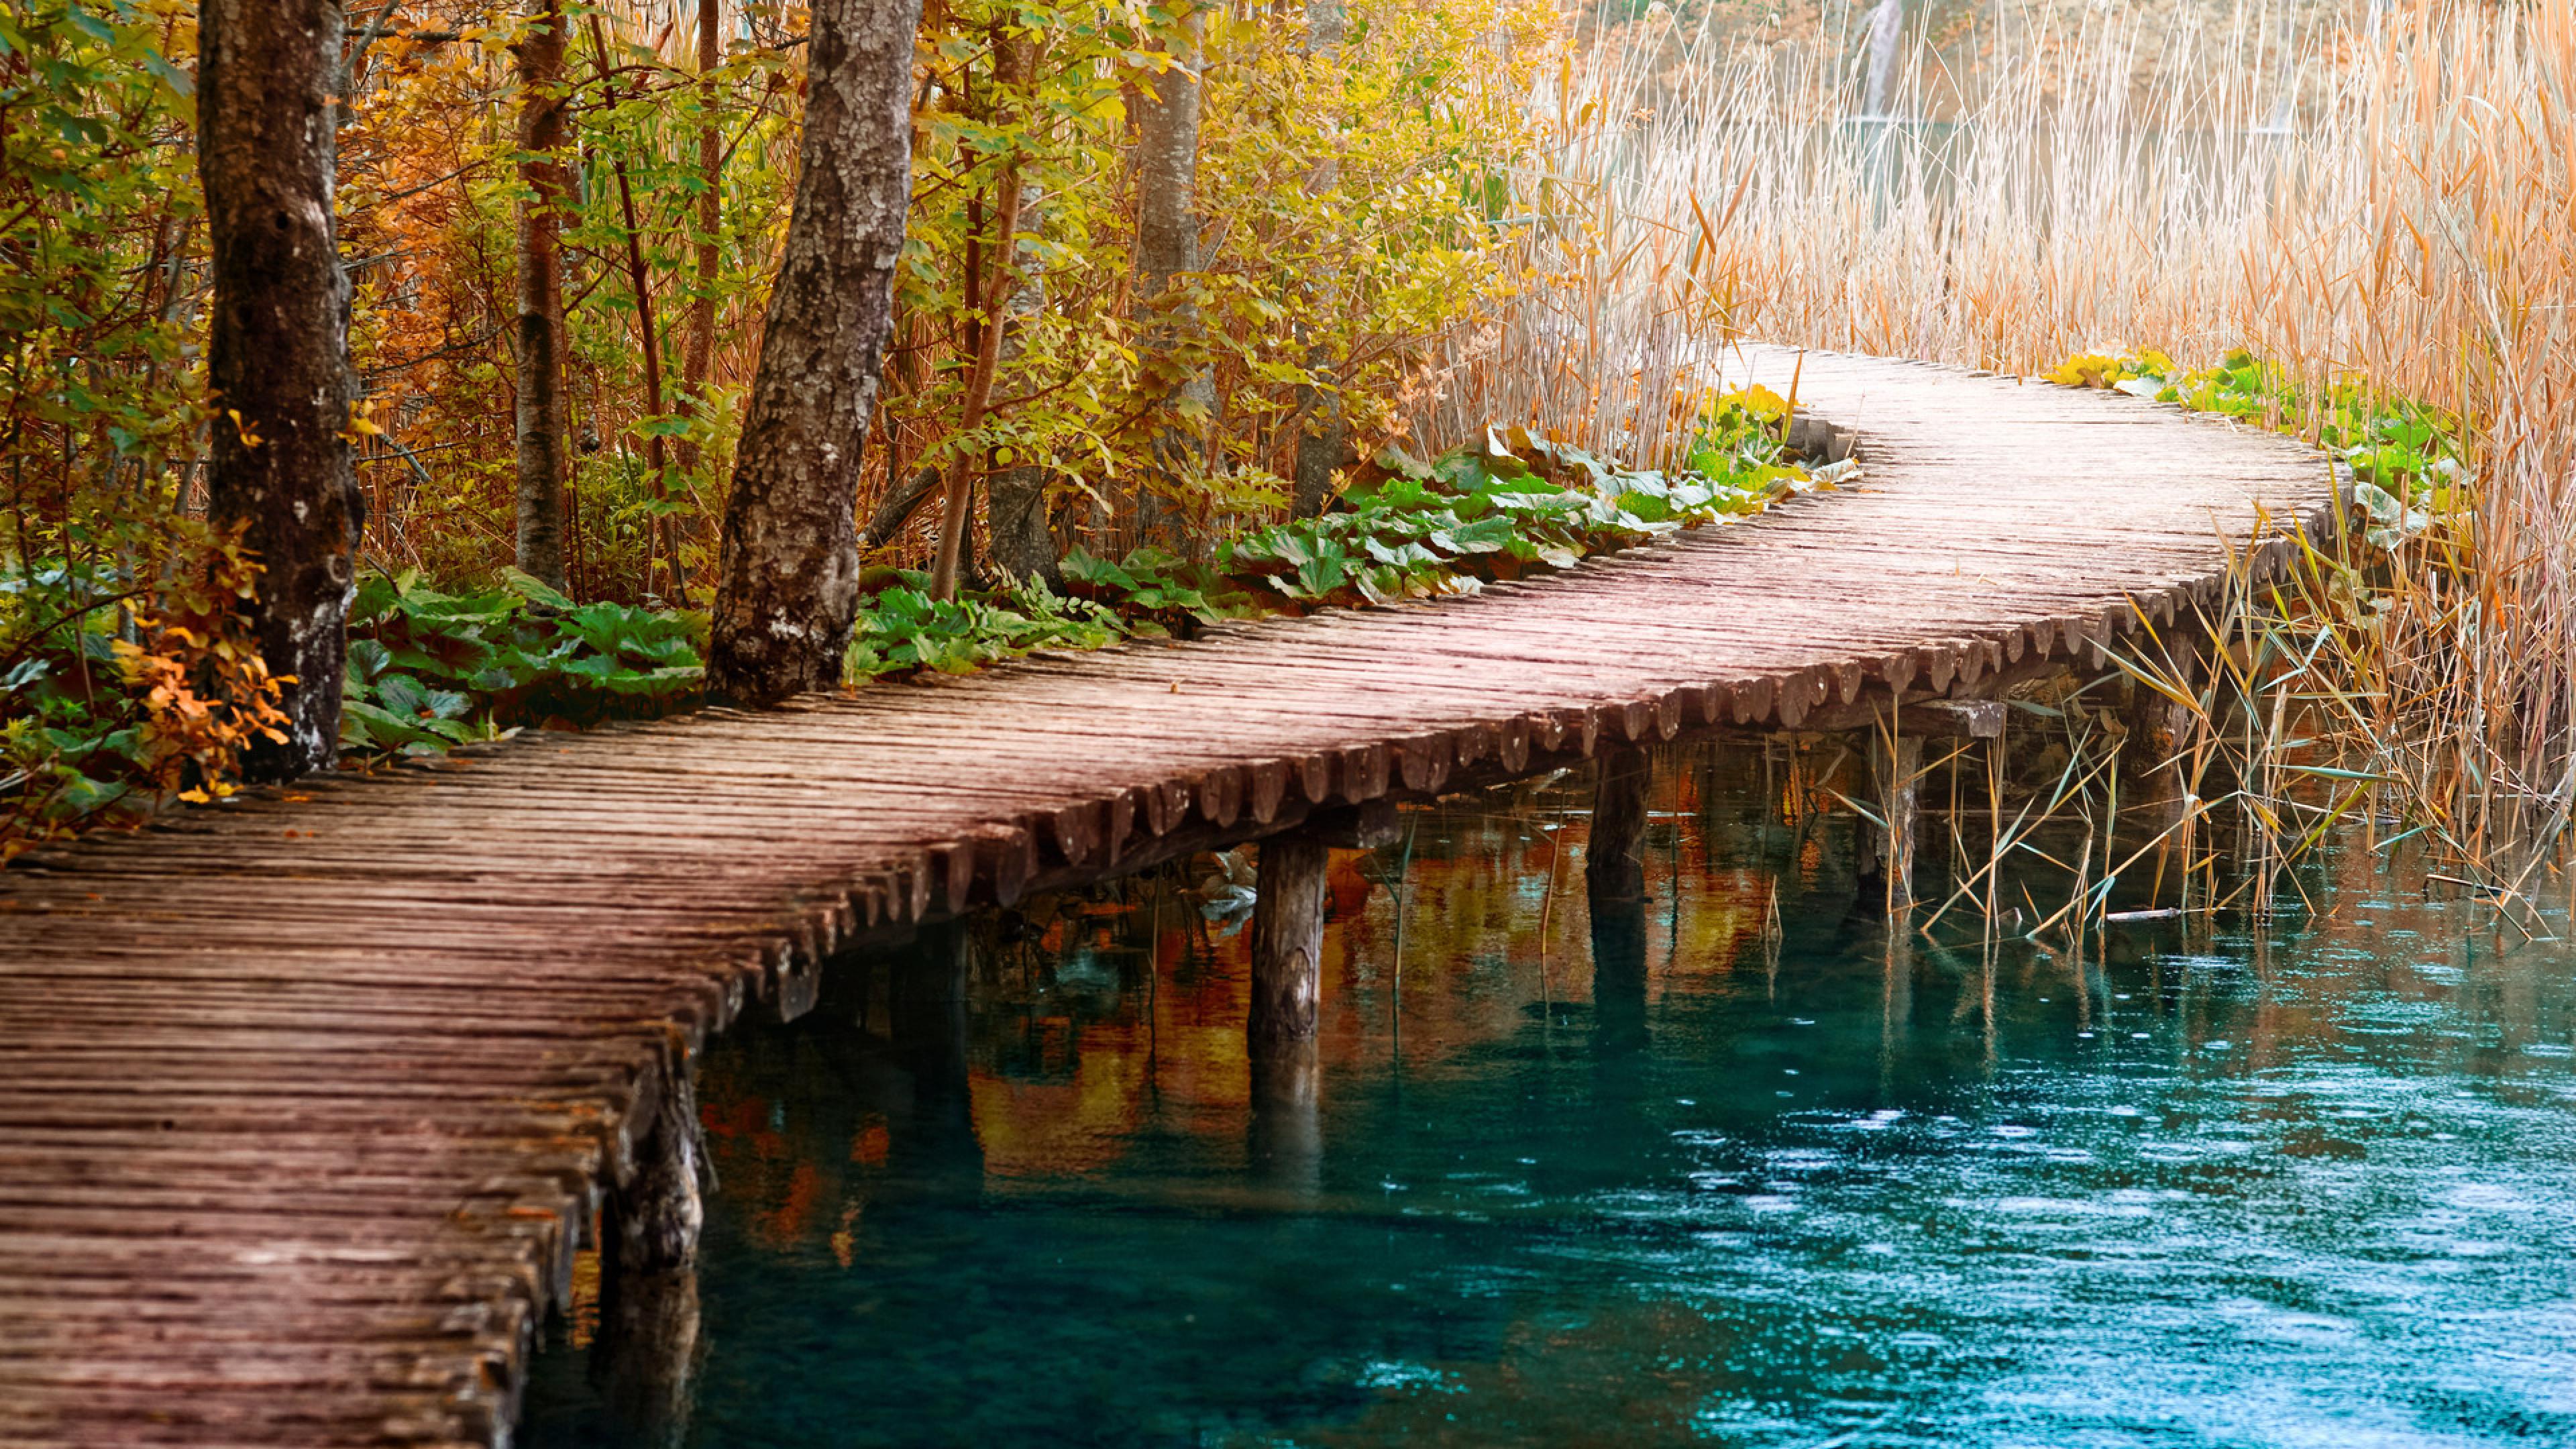 Autumn Background River Wooden Path Bridge Cane Reeds Dry : 